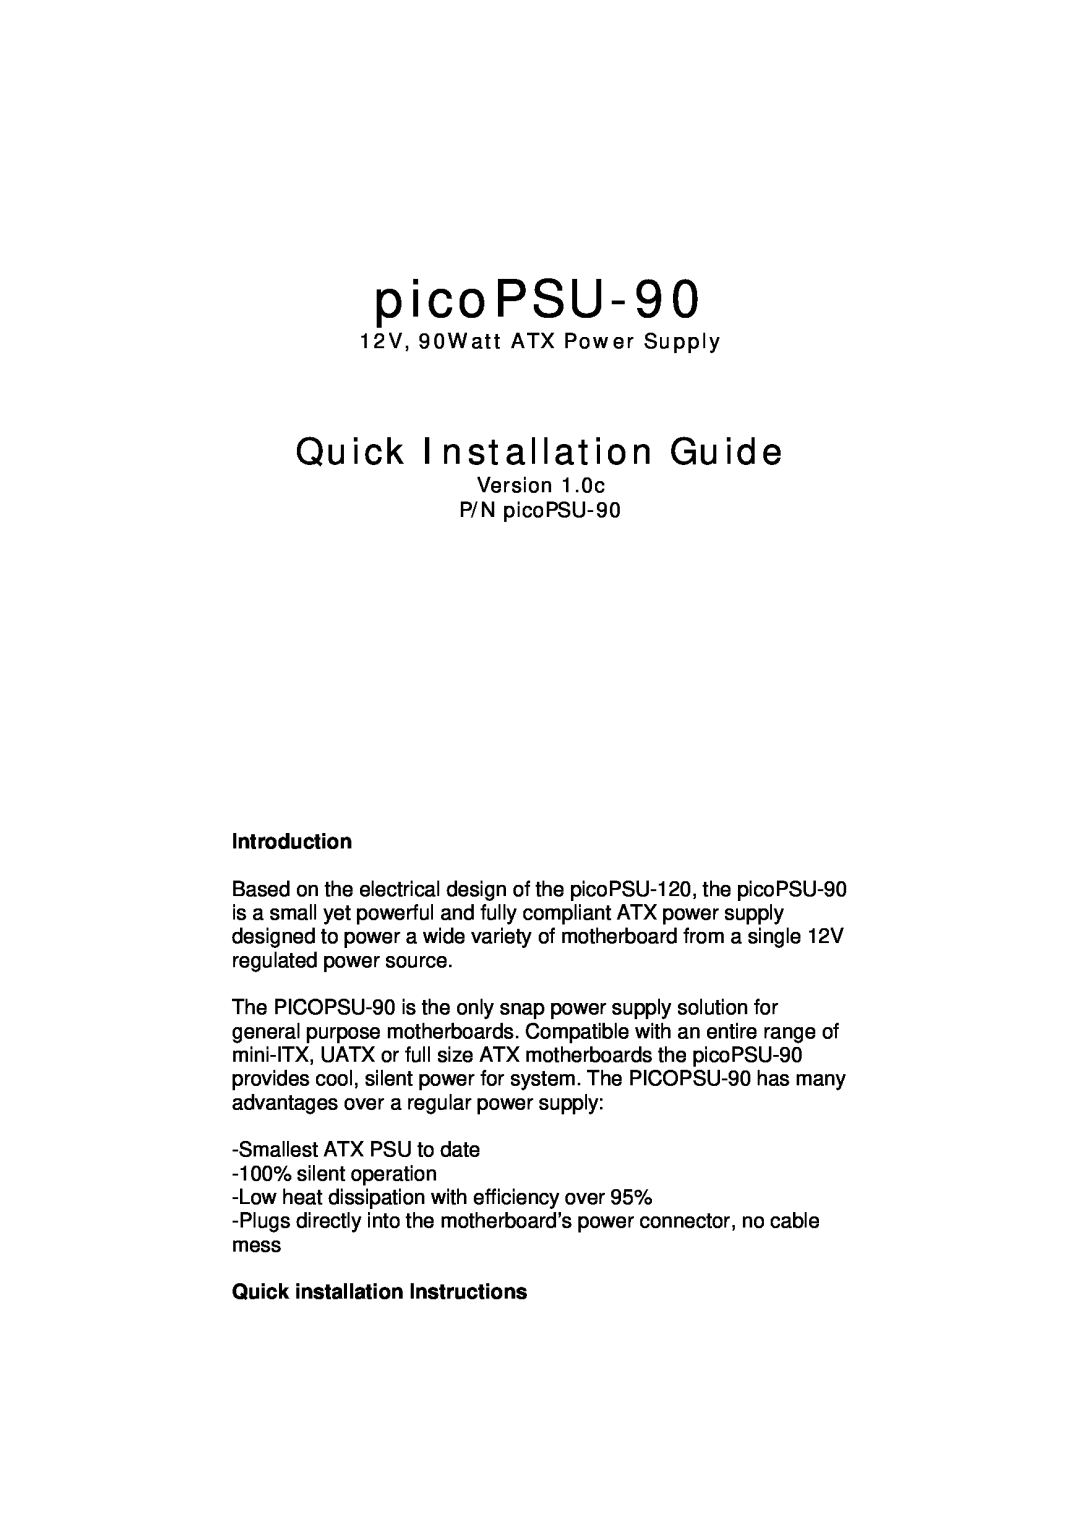 Pico Communications PICOPSU-90 installation instructions picoPSU-90, Quick Installation Guide 